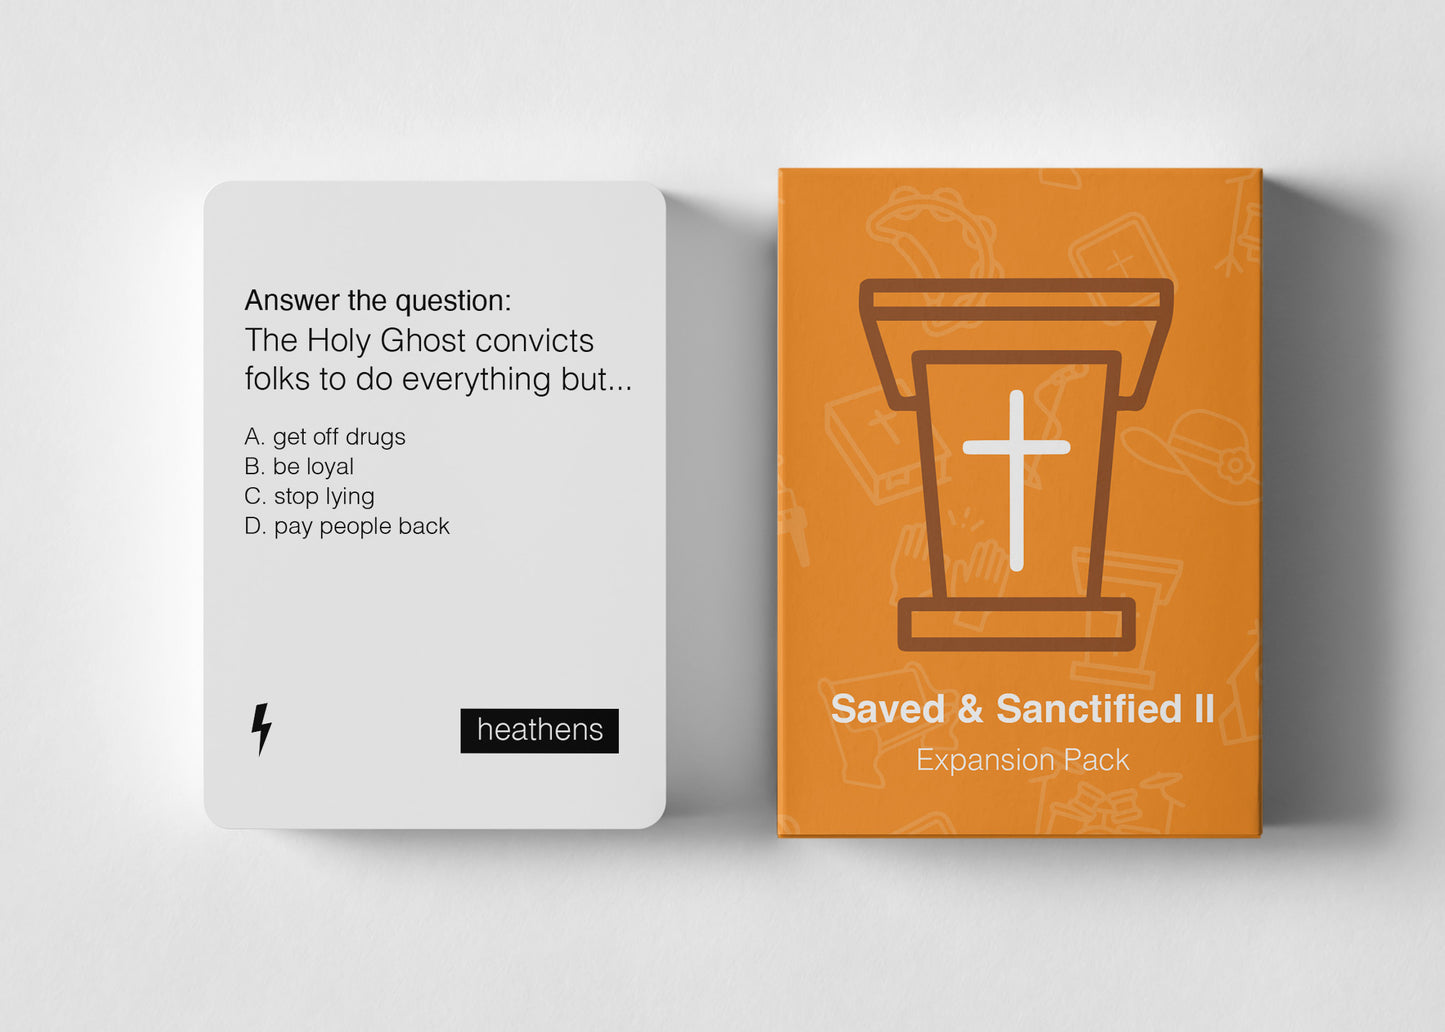 Black Card Revoked - Saved & Sanctified 2